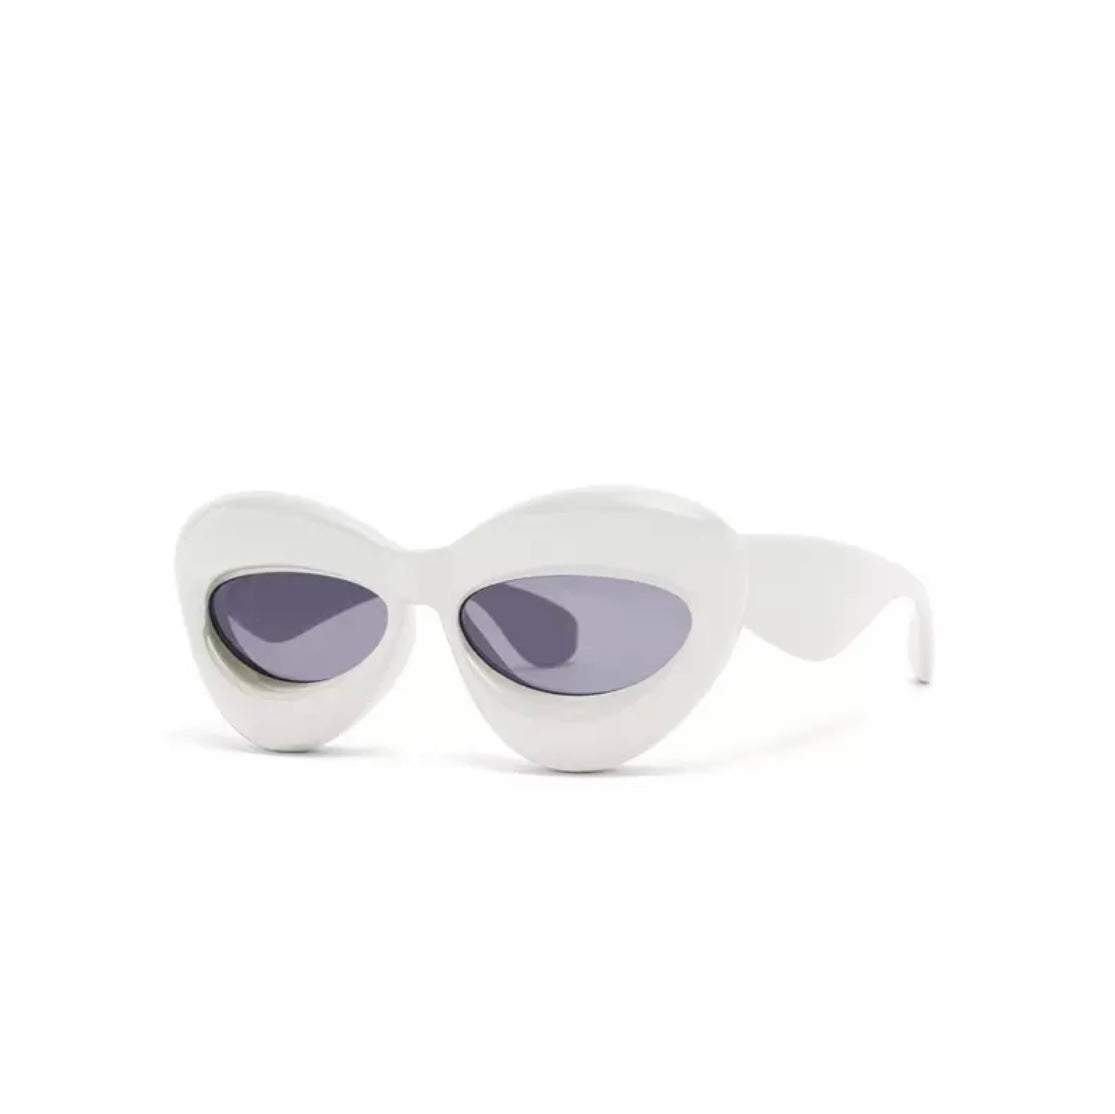 GOLDxTEAL white cat eye sunglasses.